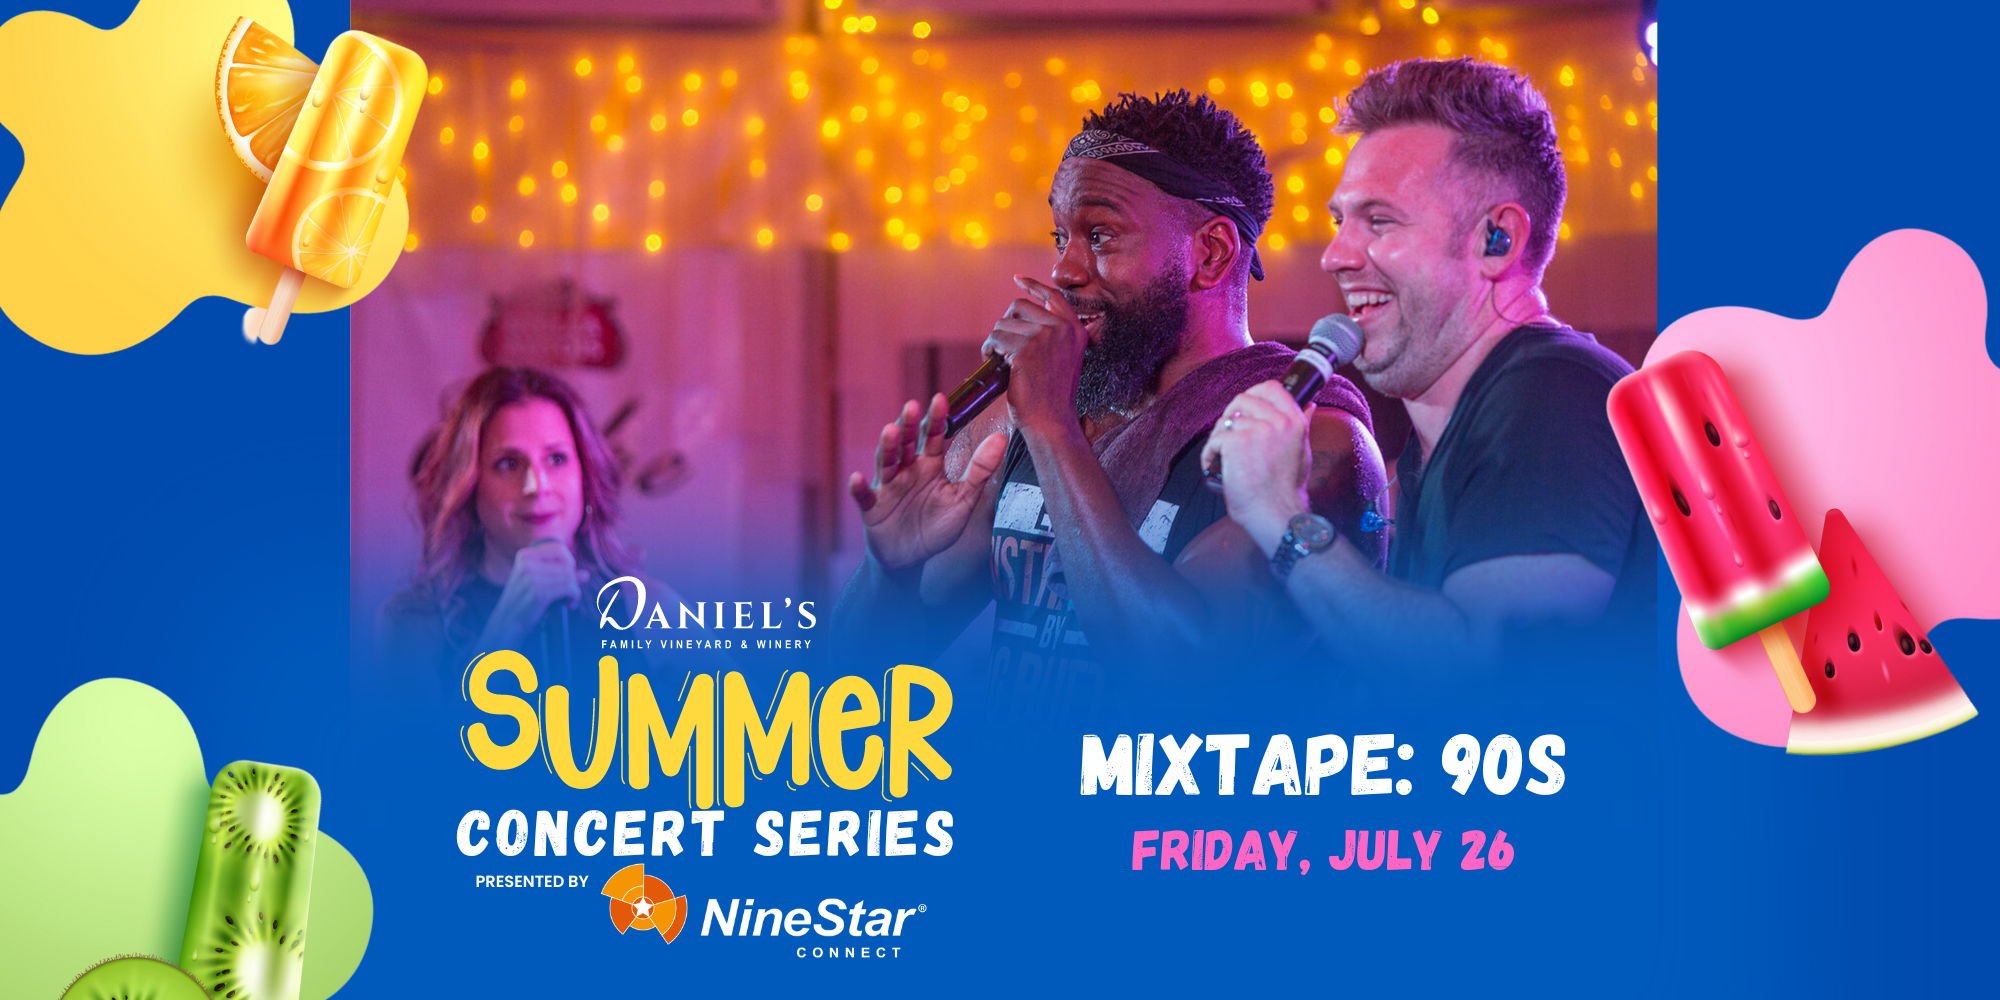 Summer Concert Series at Daniel's Vineyard promotional image